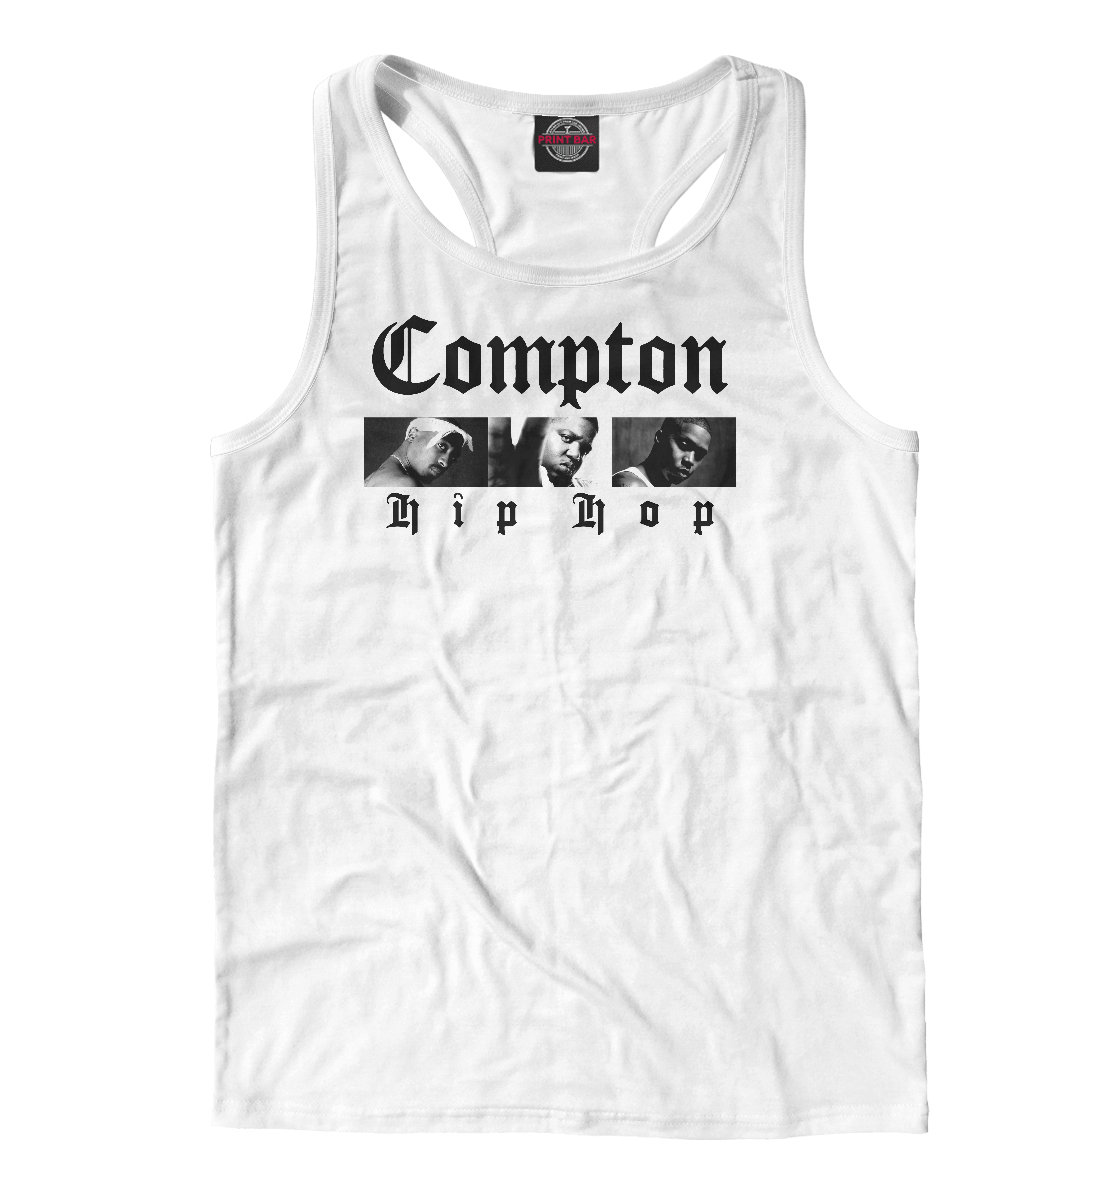 Compton compton